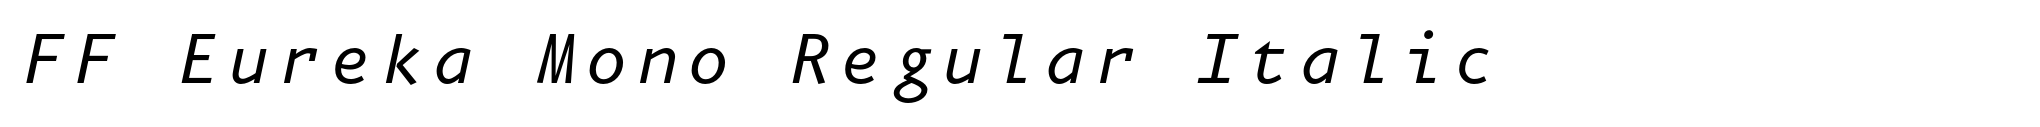 FF Eureka Mono Regular Italic image